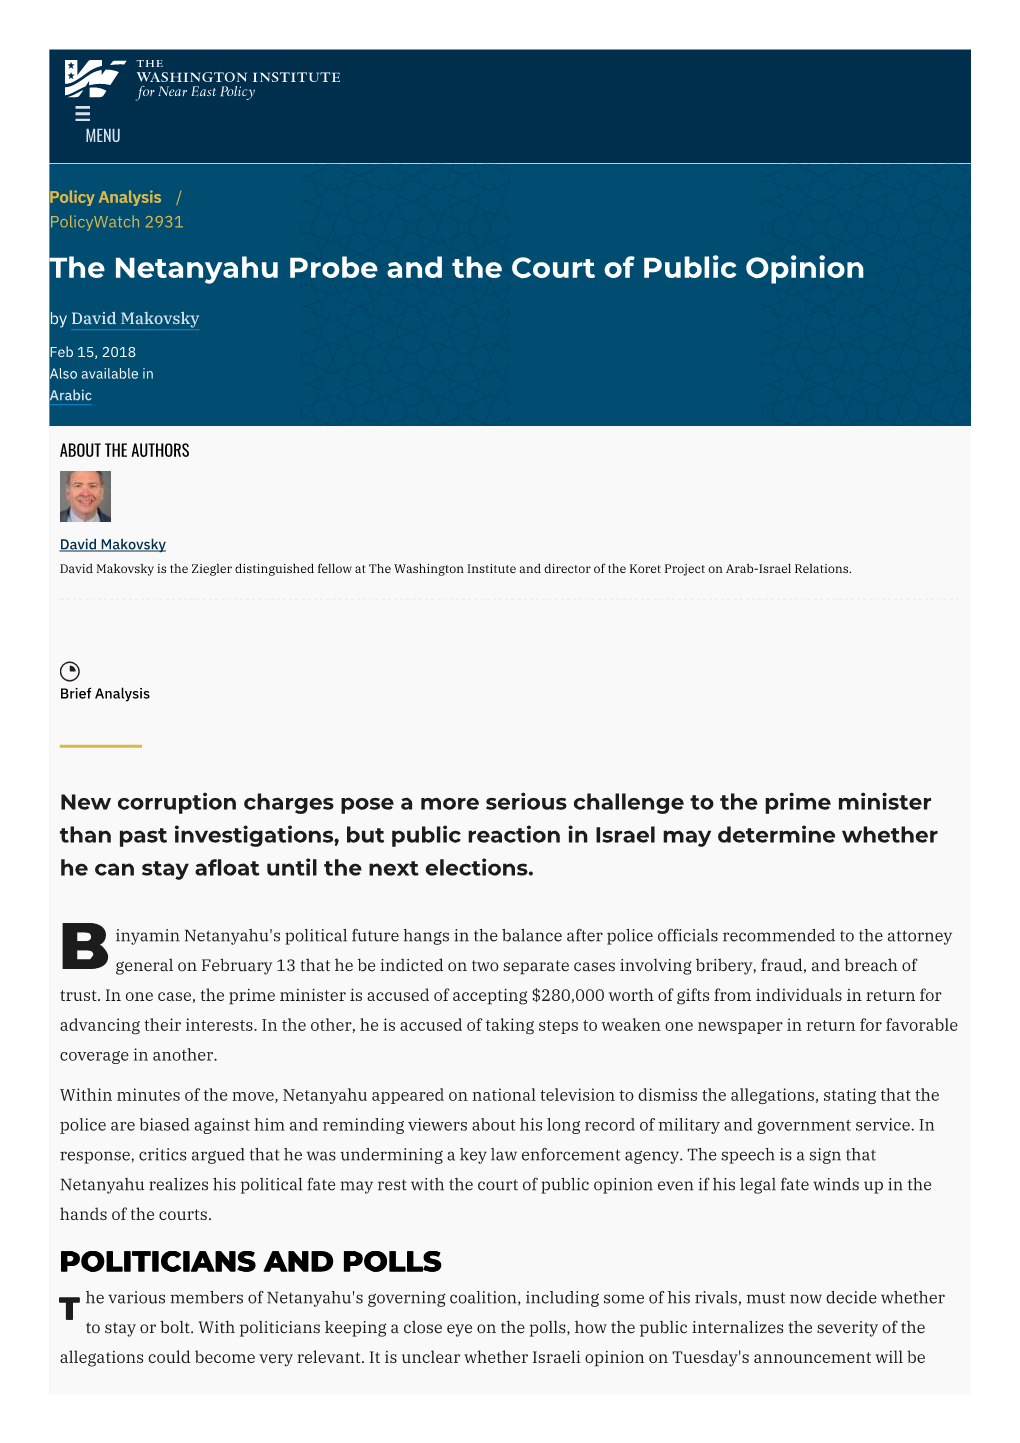 The Netanyahu Probe and the Court of Public Opinion by David Makovsky